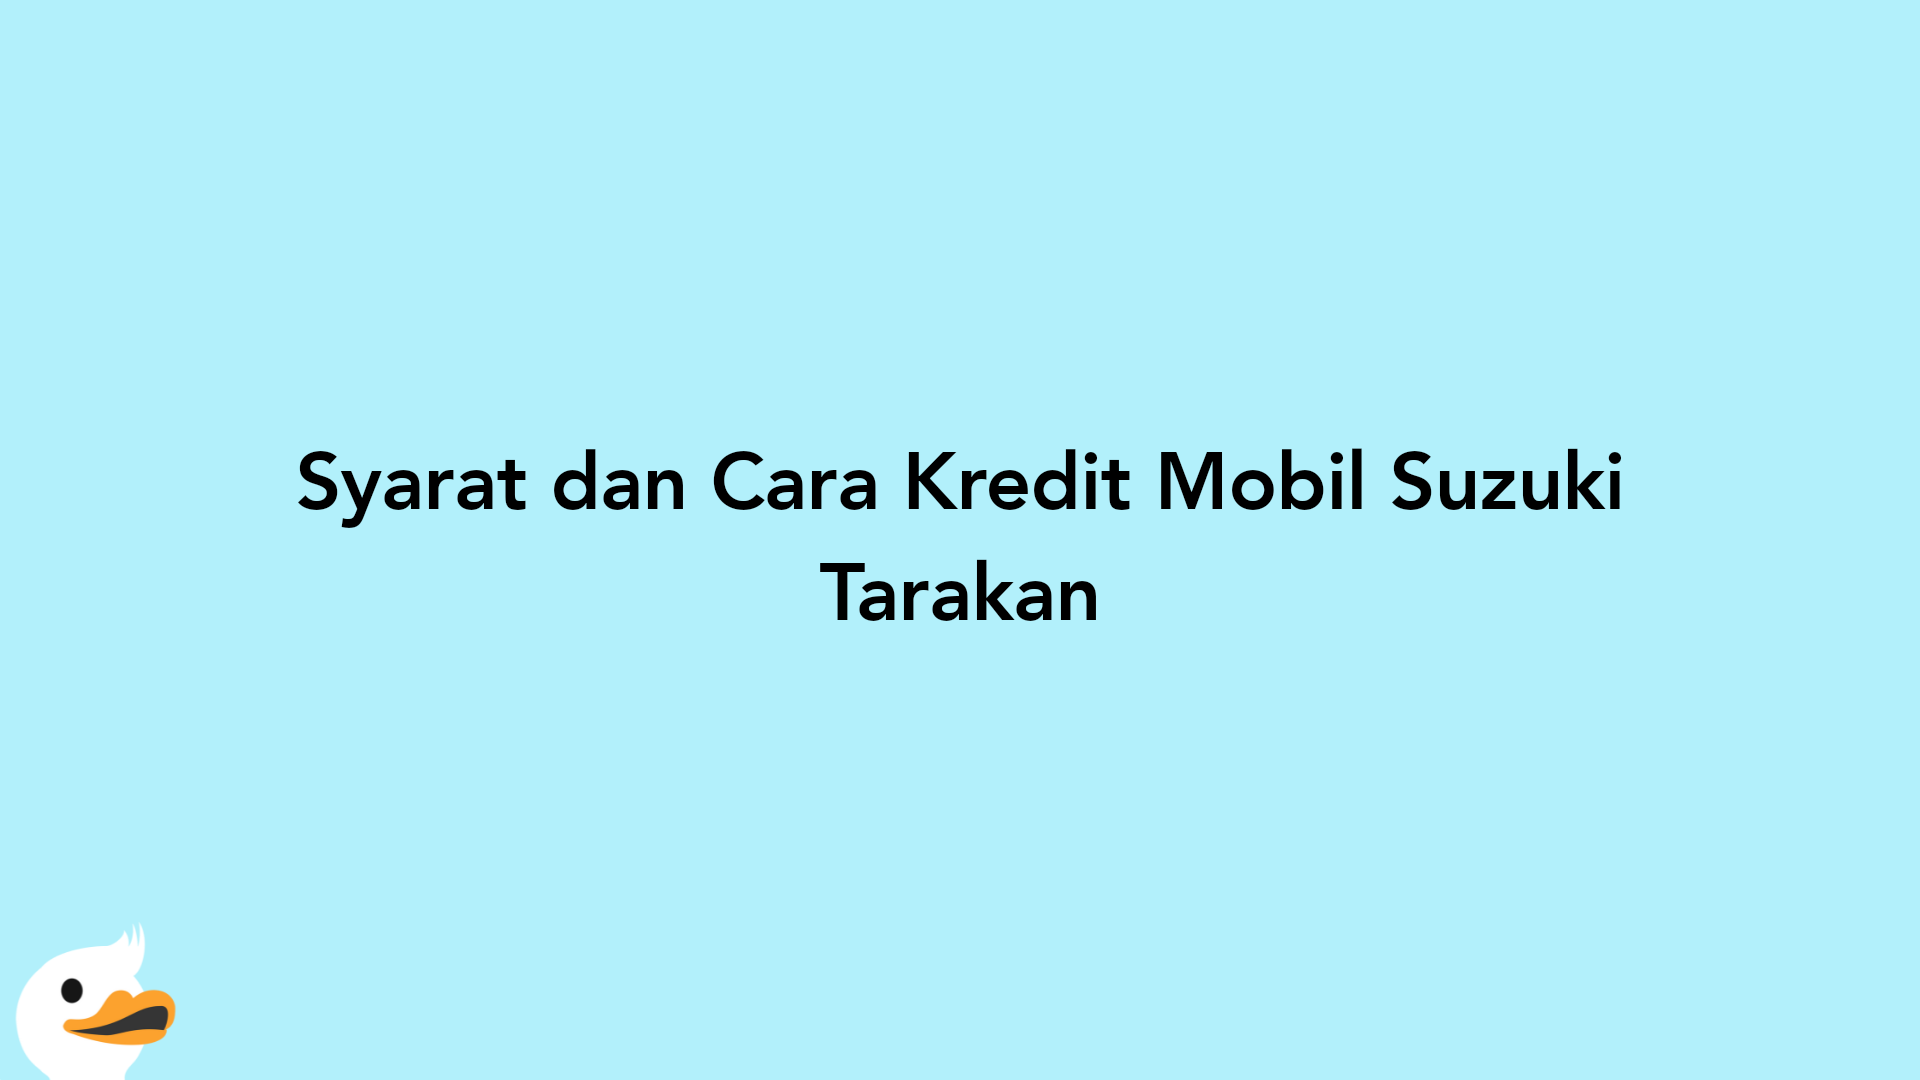 Syarat dan Cara Kredit Mobil Suzuki Tarakan